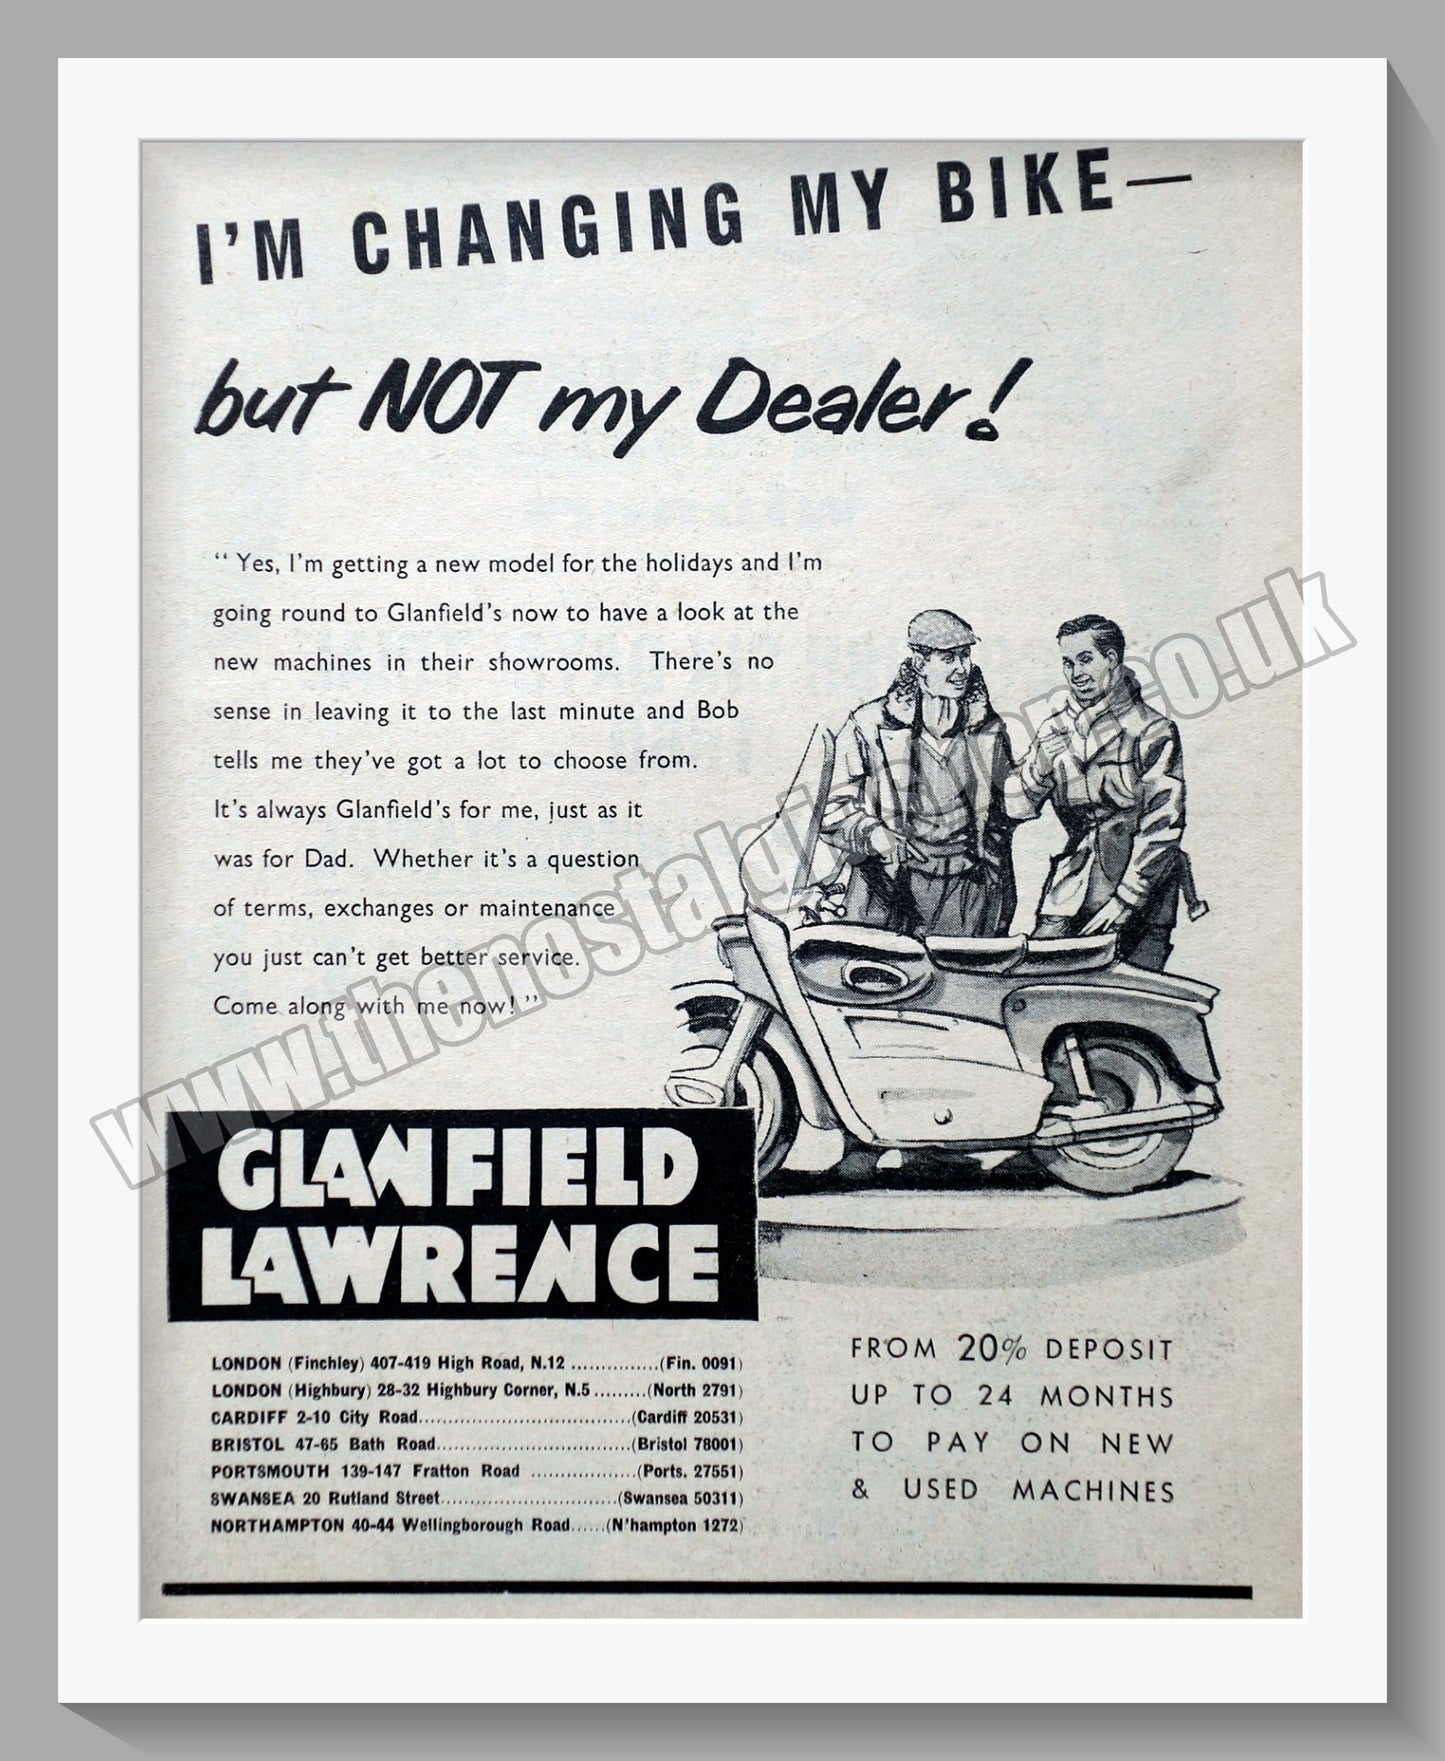 Glanfield Lawrence Motorcycle Dealers. Original Advert 1960 (ref AD57423)